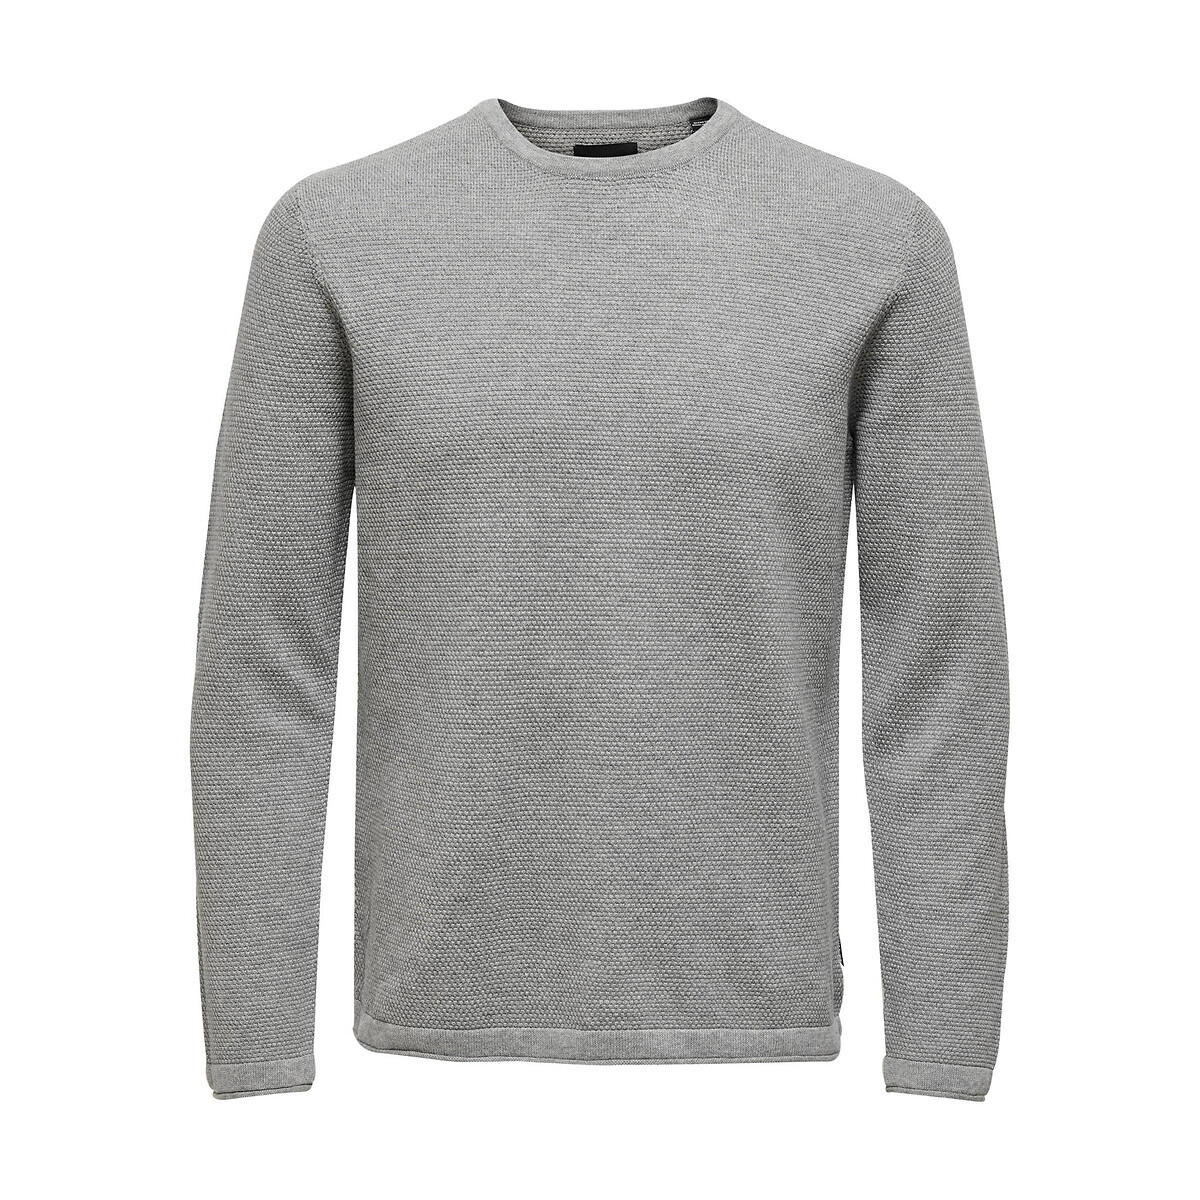 Пуловер С круглым вырезом из структурного трикотажа Panter Life S серый LaRedoute, размер S - фото 5